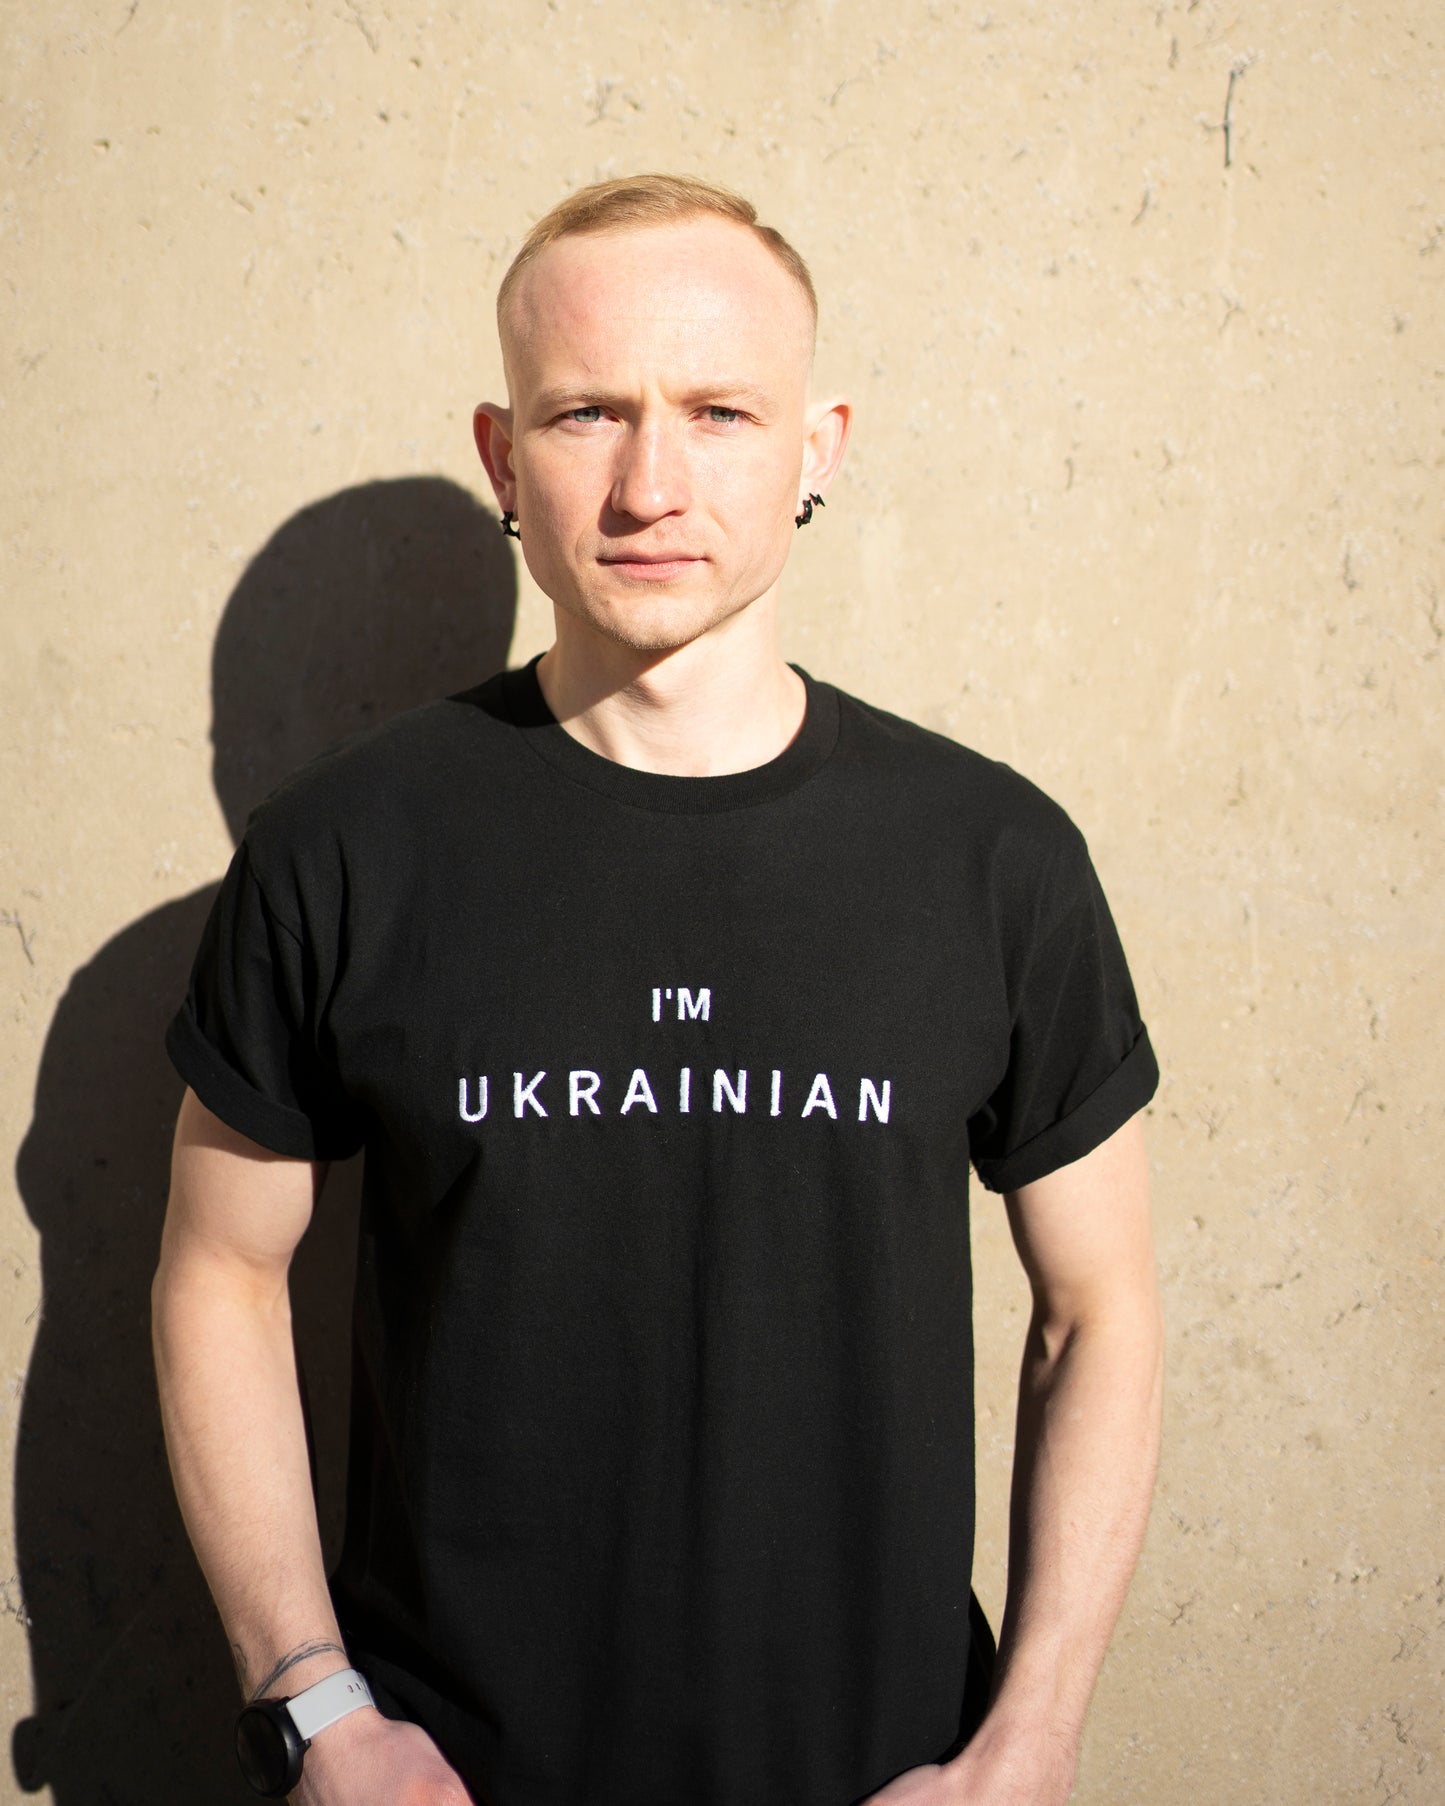 I'm Ukrainian T-shirt